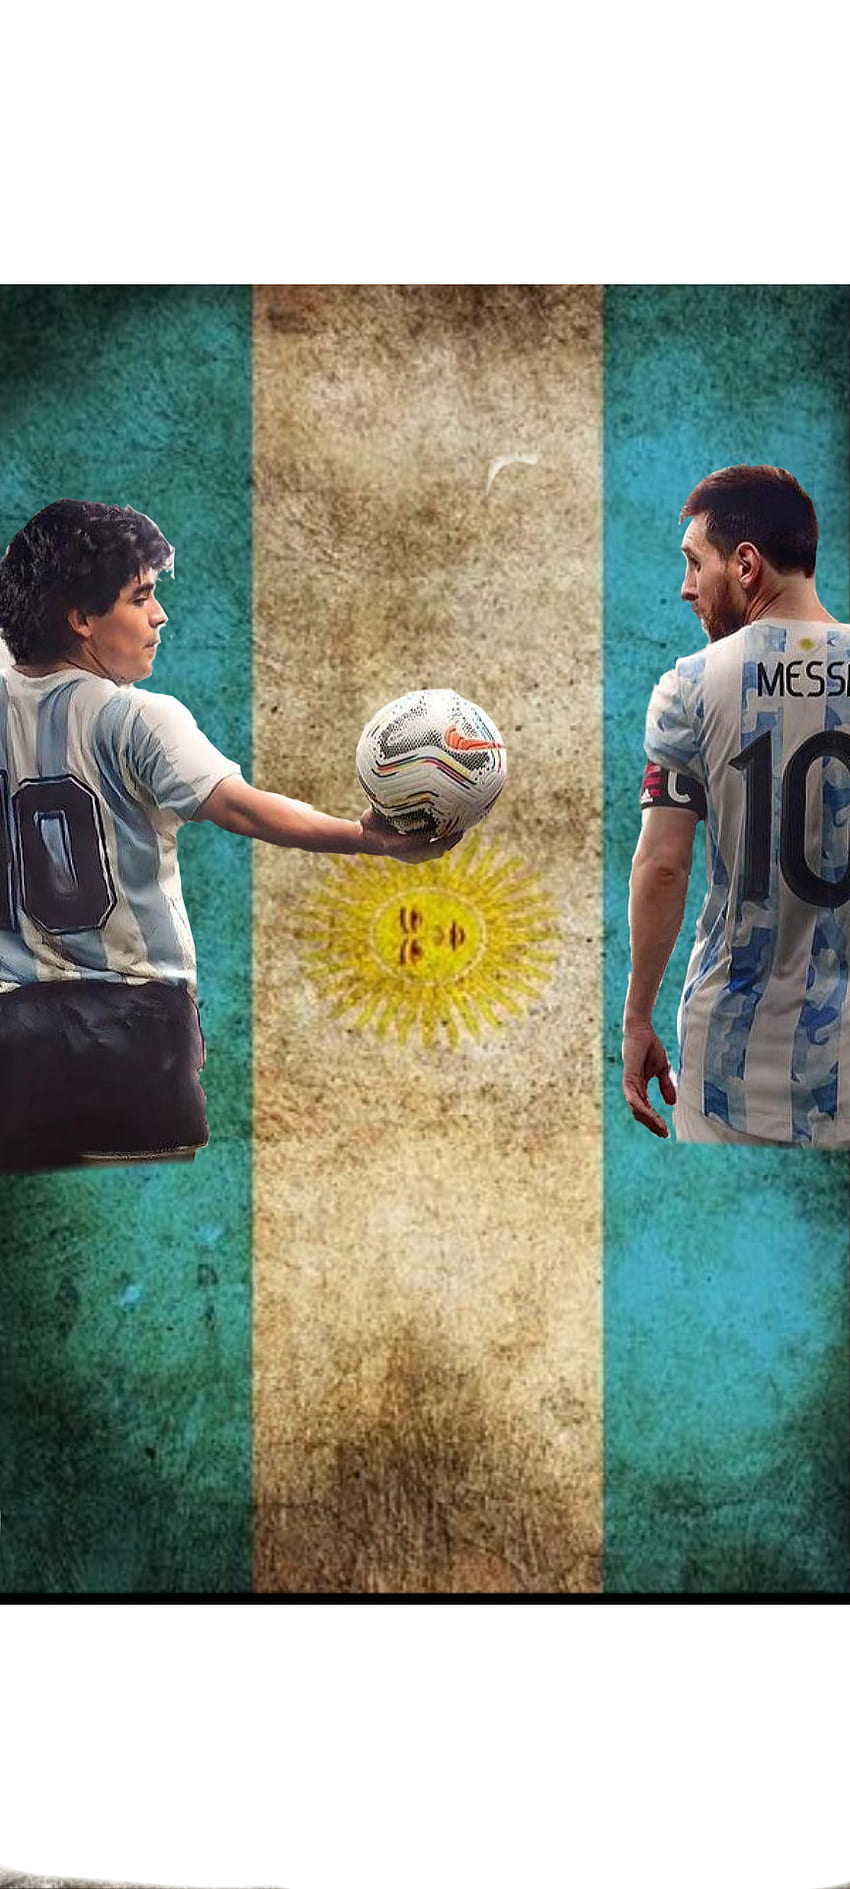 Messi and Maradona Wallpapers  Top 25 Best Messi and Maradona Wallpapers  Download